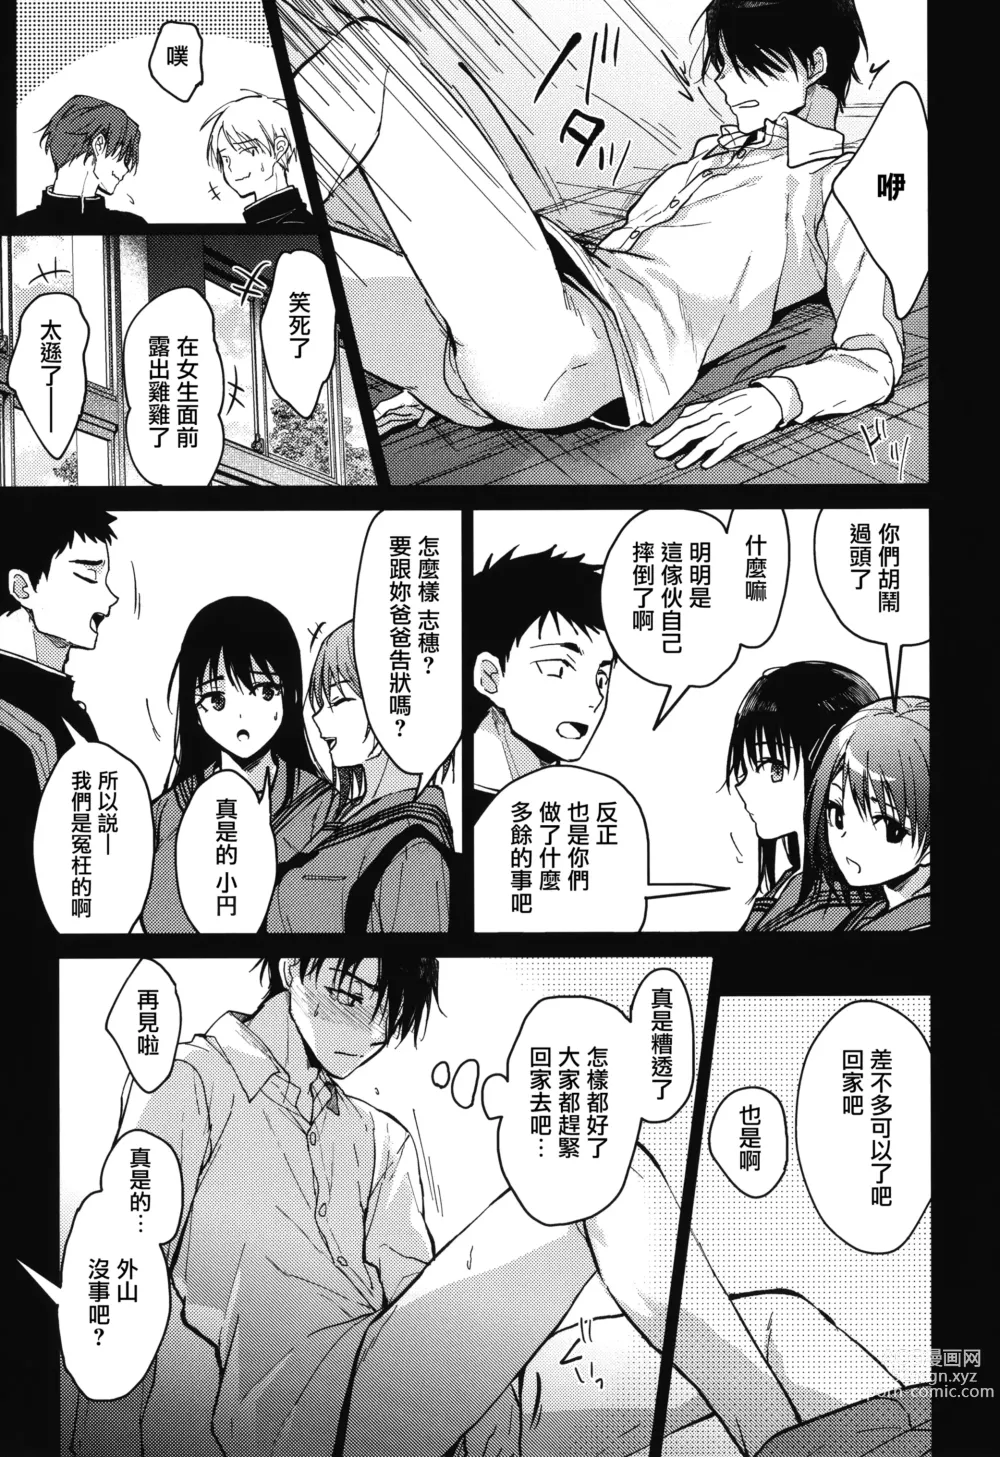 Page 9 of manga Amami + Toranoana Kounyuu Tokuten 4P Leaflet